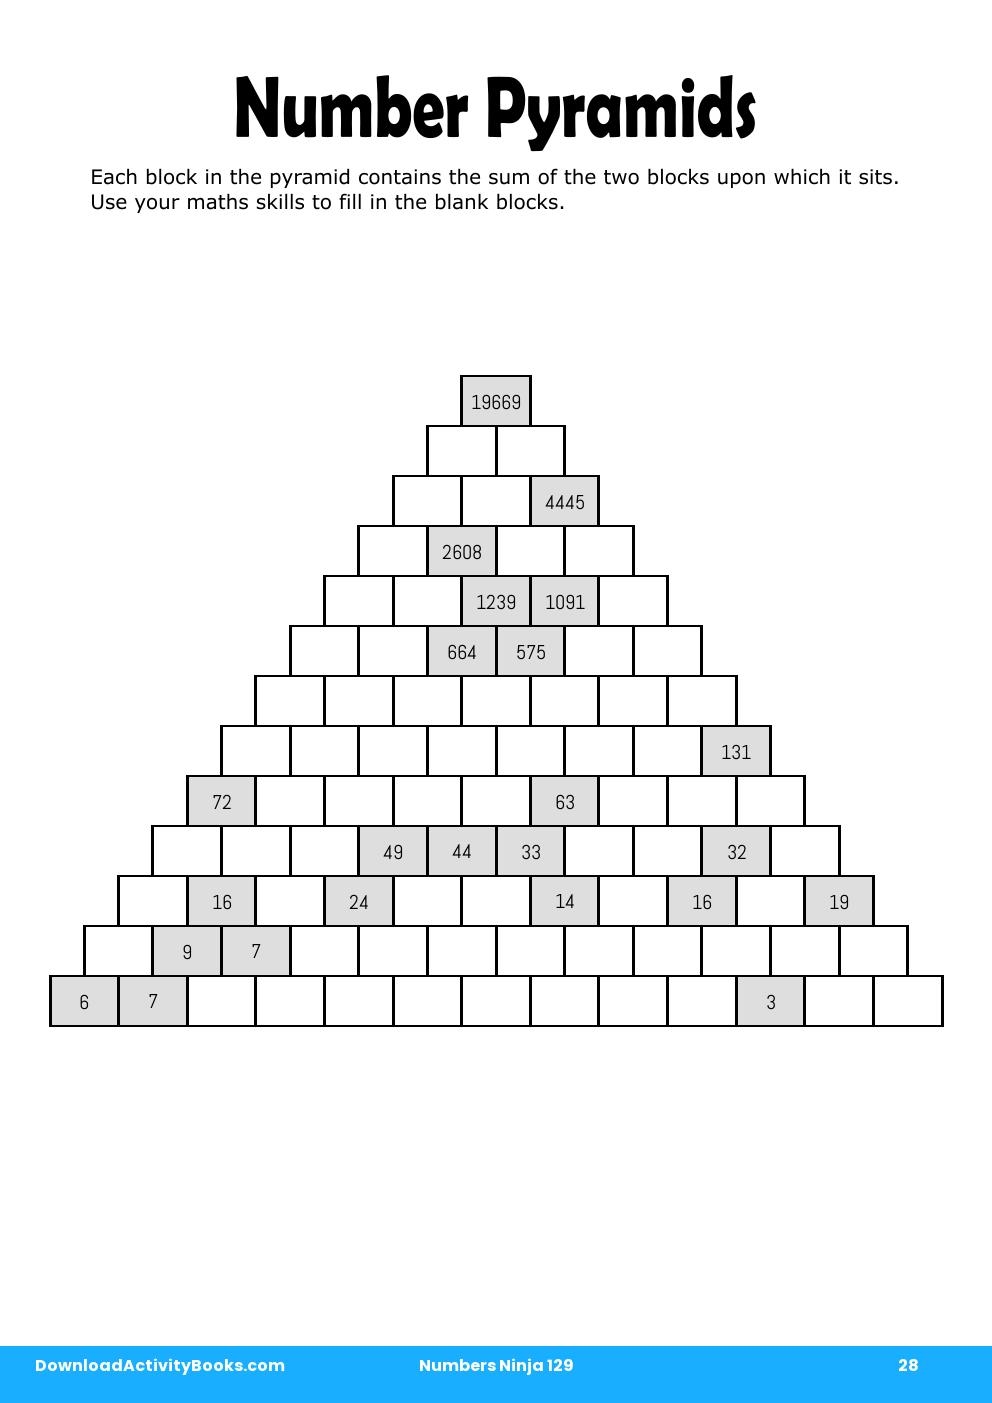 Number Pyramids in Numbers Ninja 129